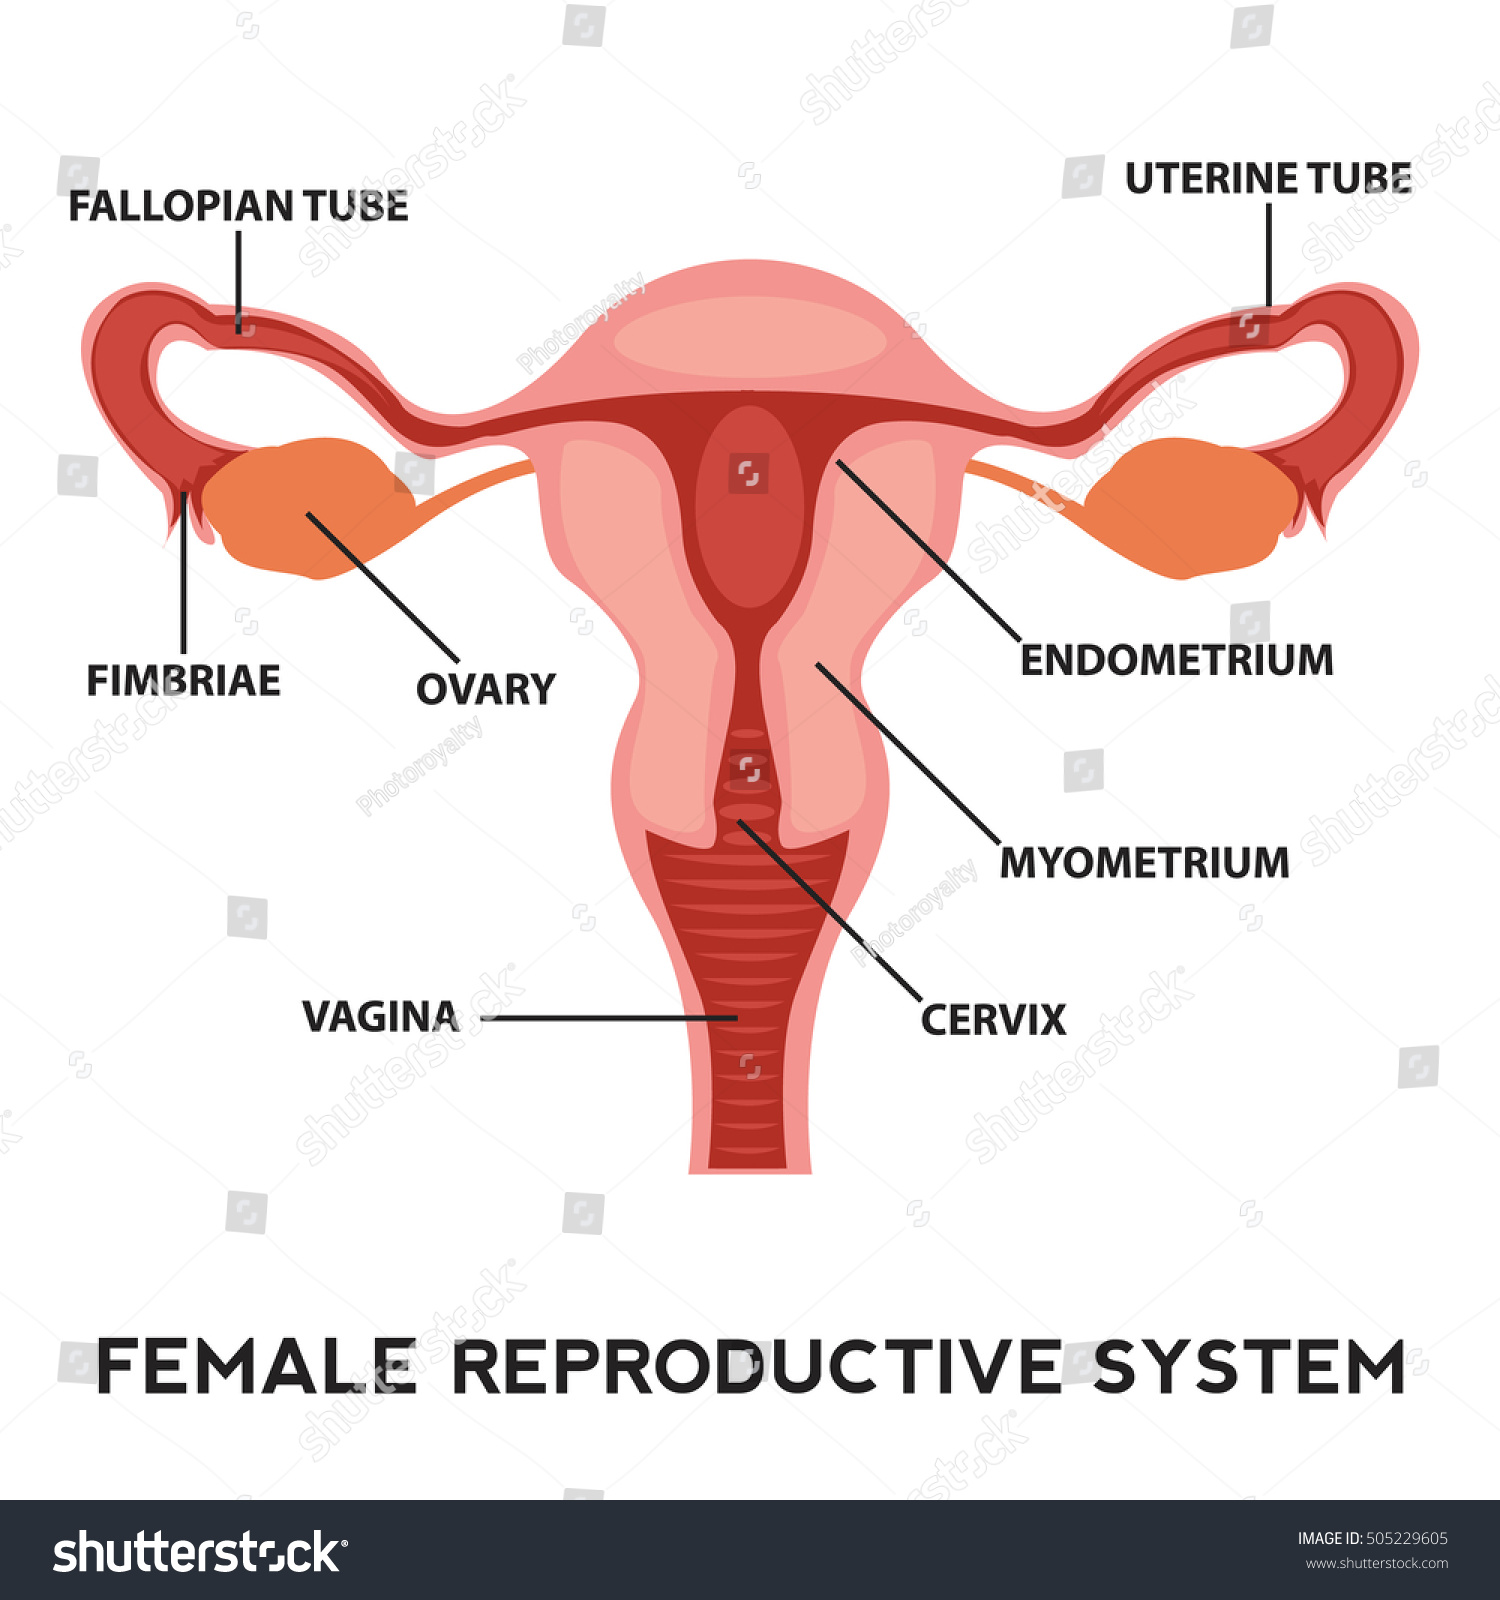 Female Reproductive System Image Diagram Vagina Medical Human Anatomy